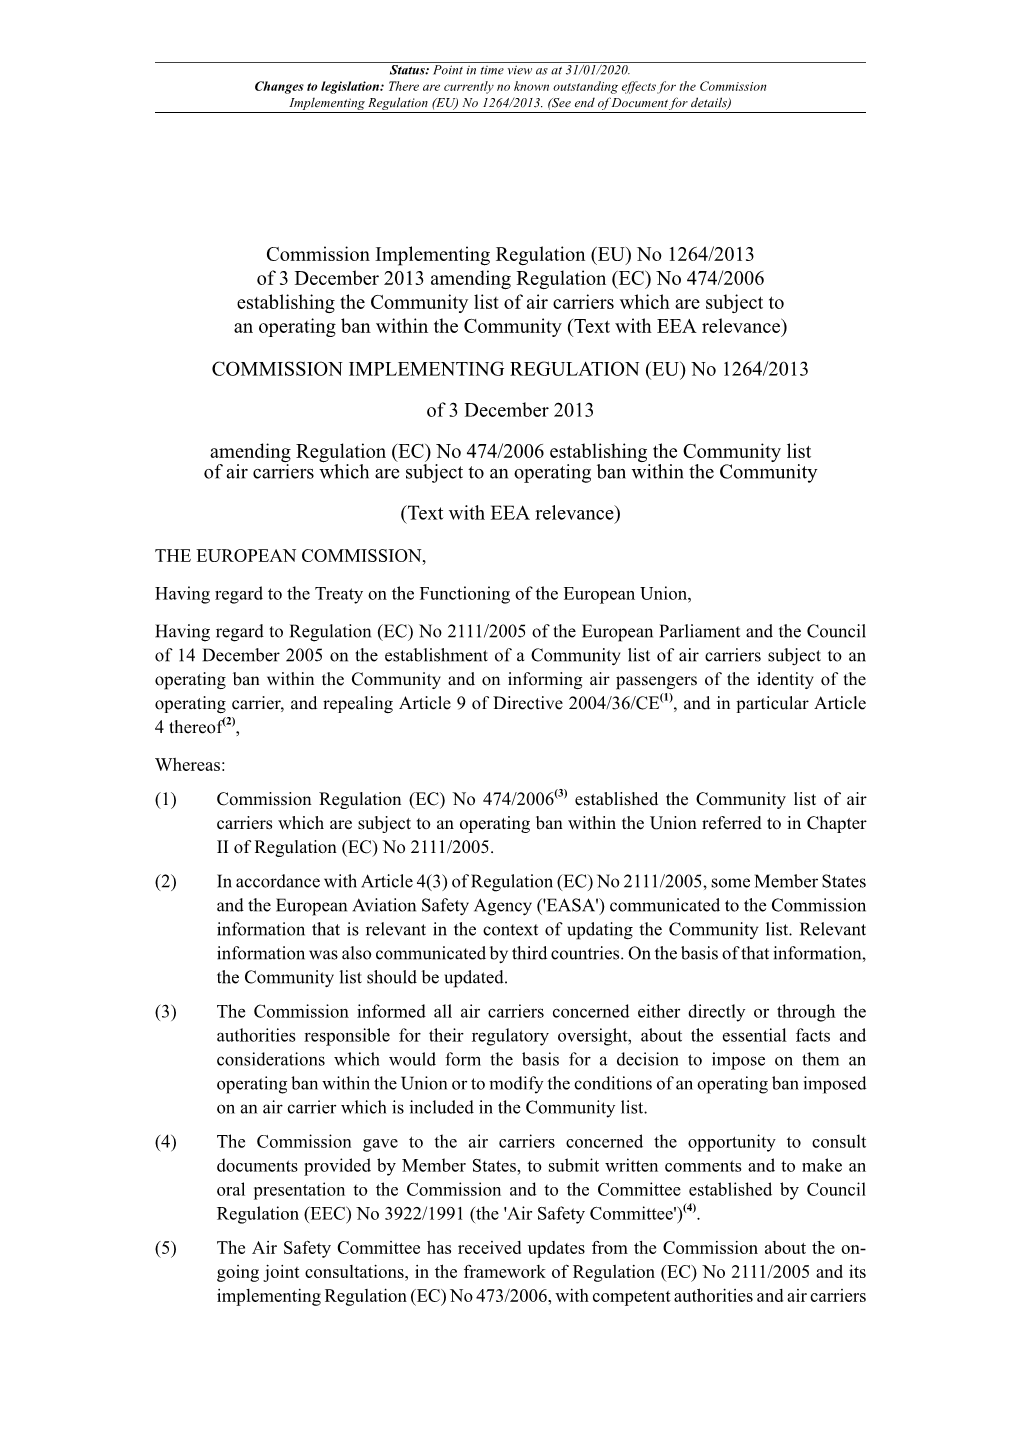 Commission Implementing Regulation (EU) No 1264/2013